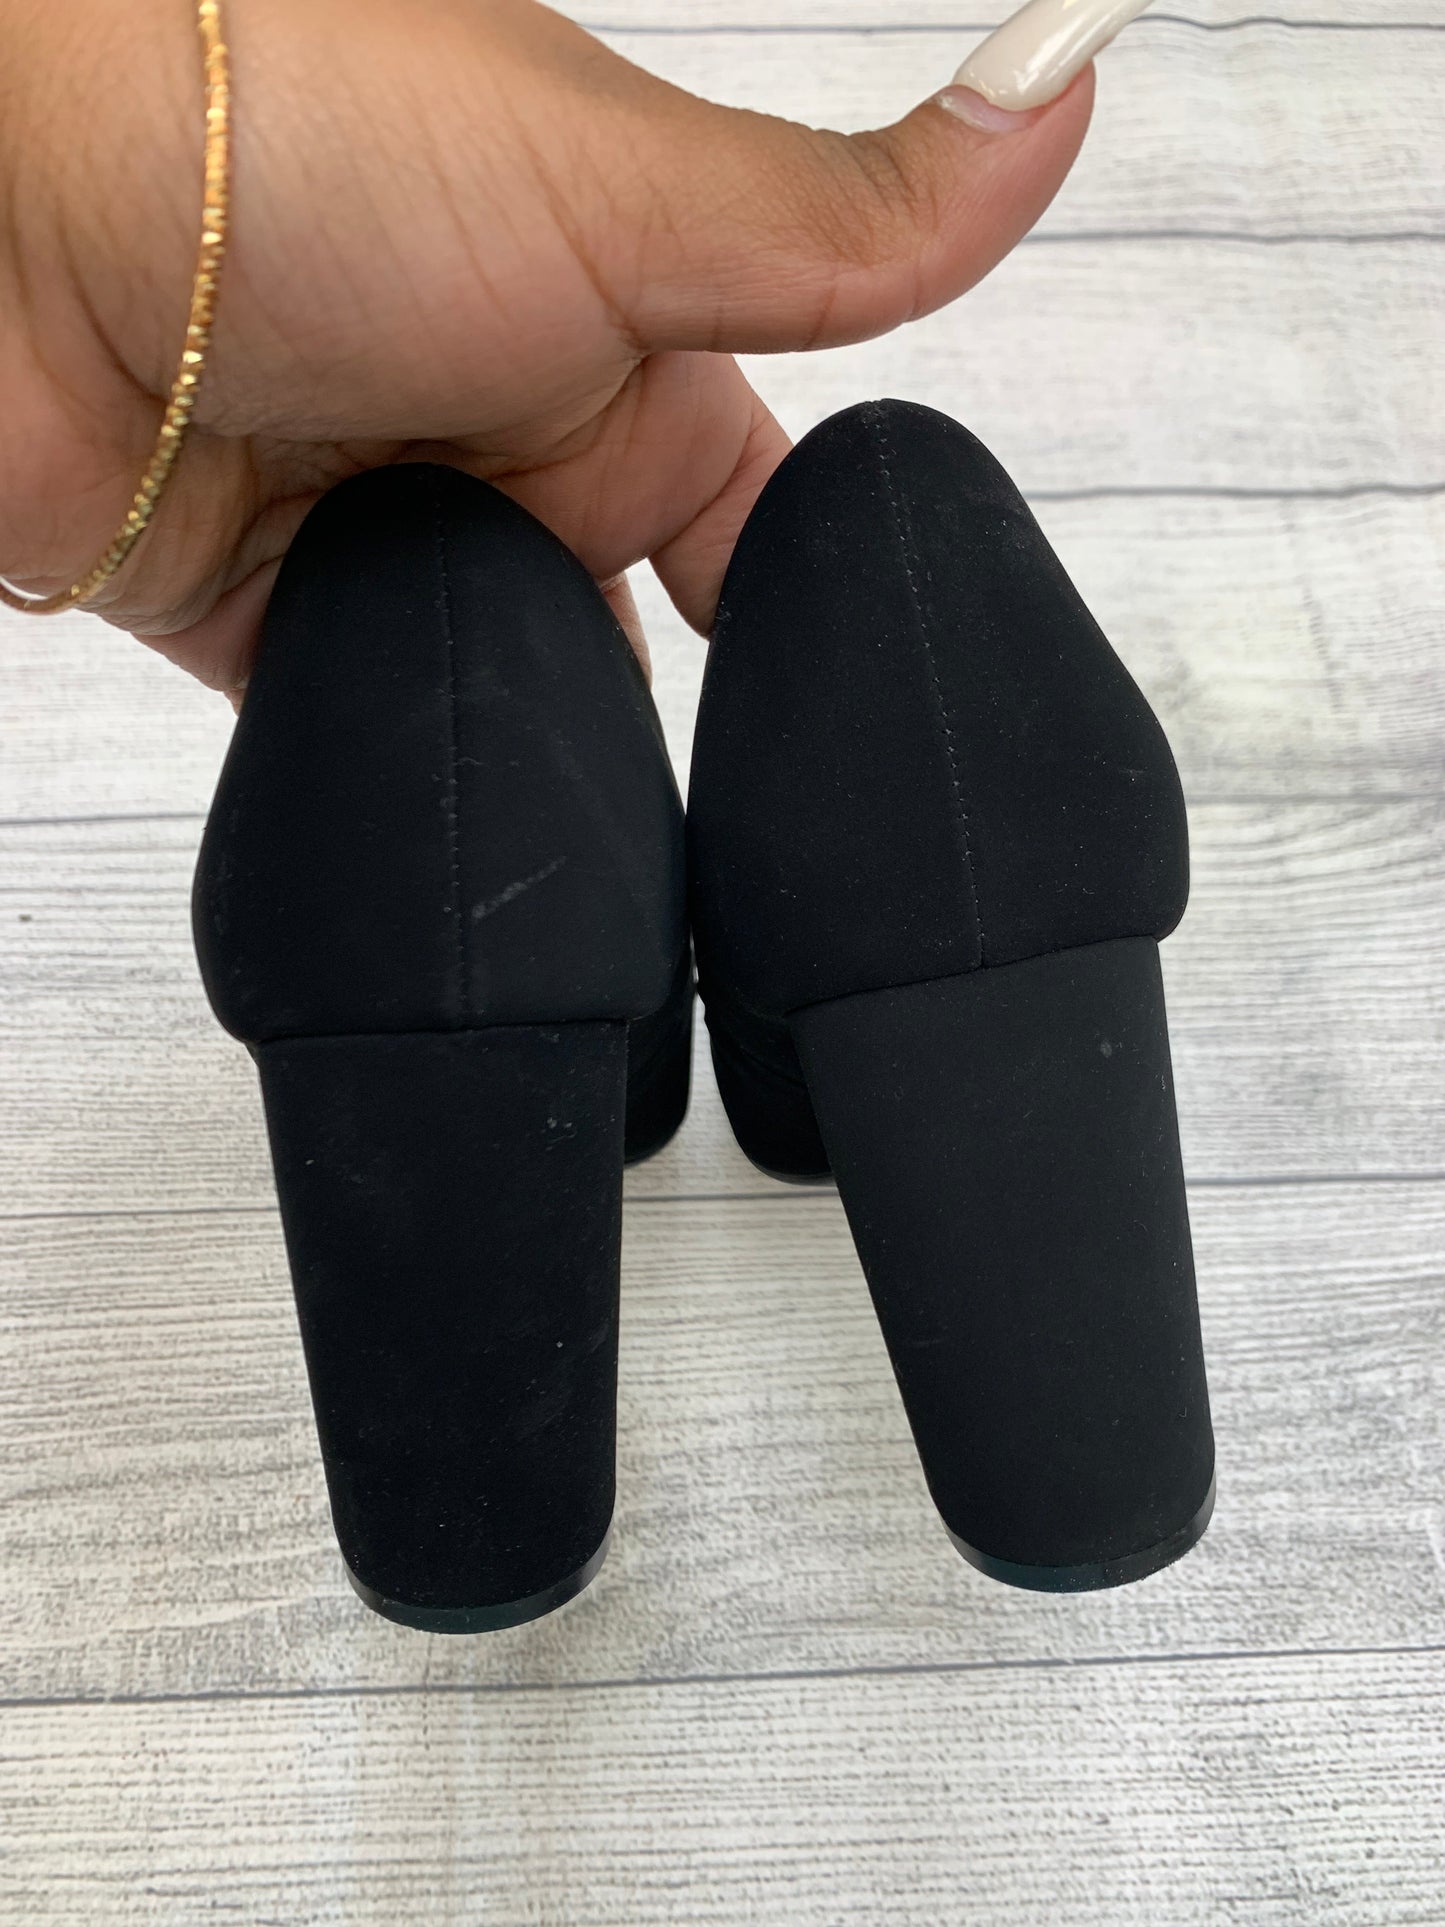 Black Shoes Heels Block Bamboo, Size 8